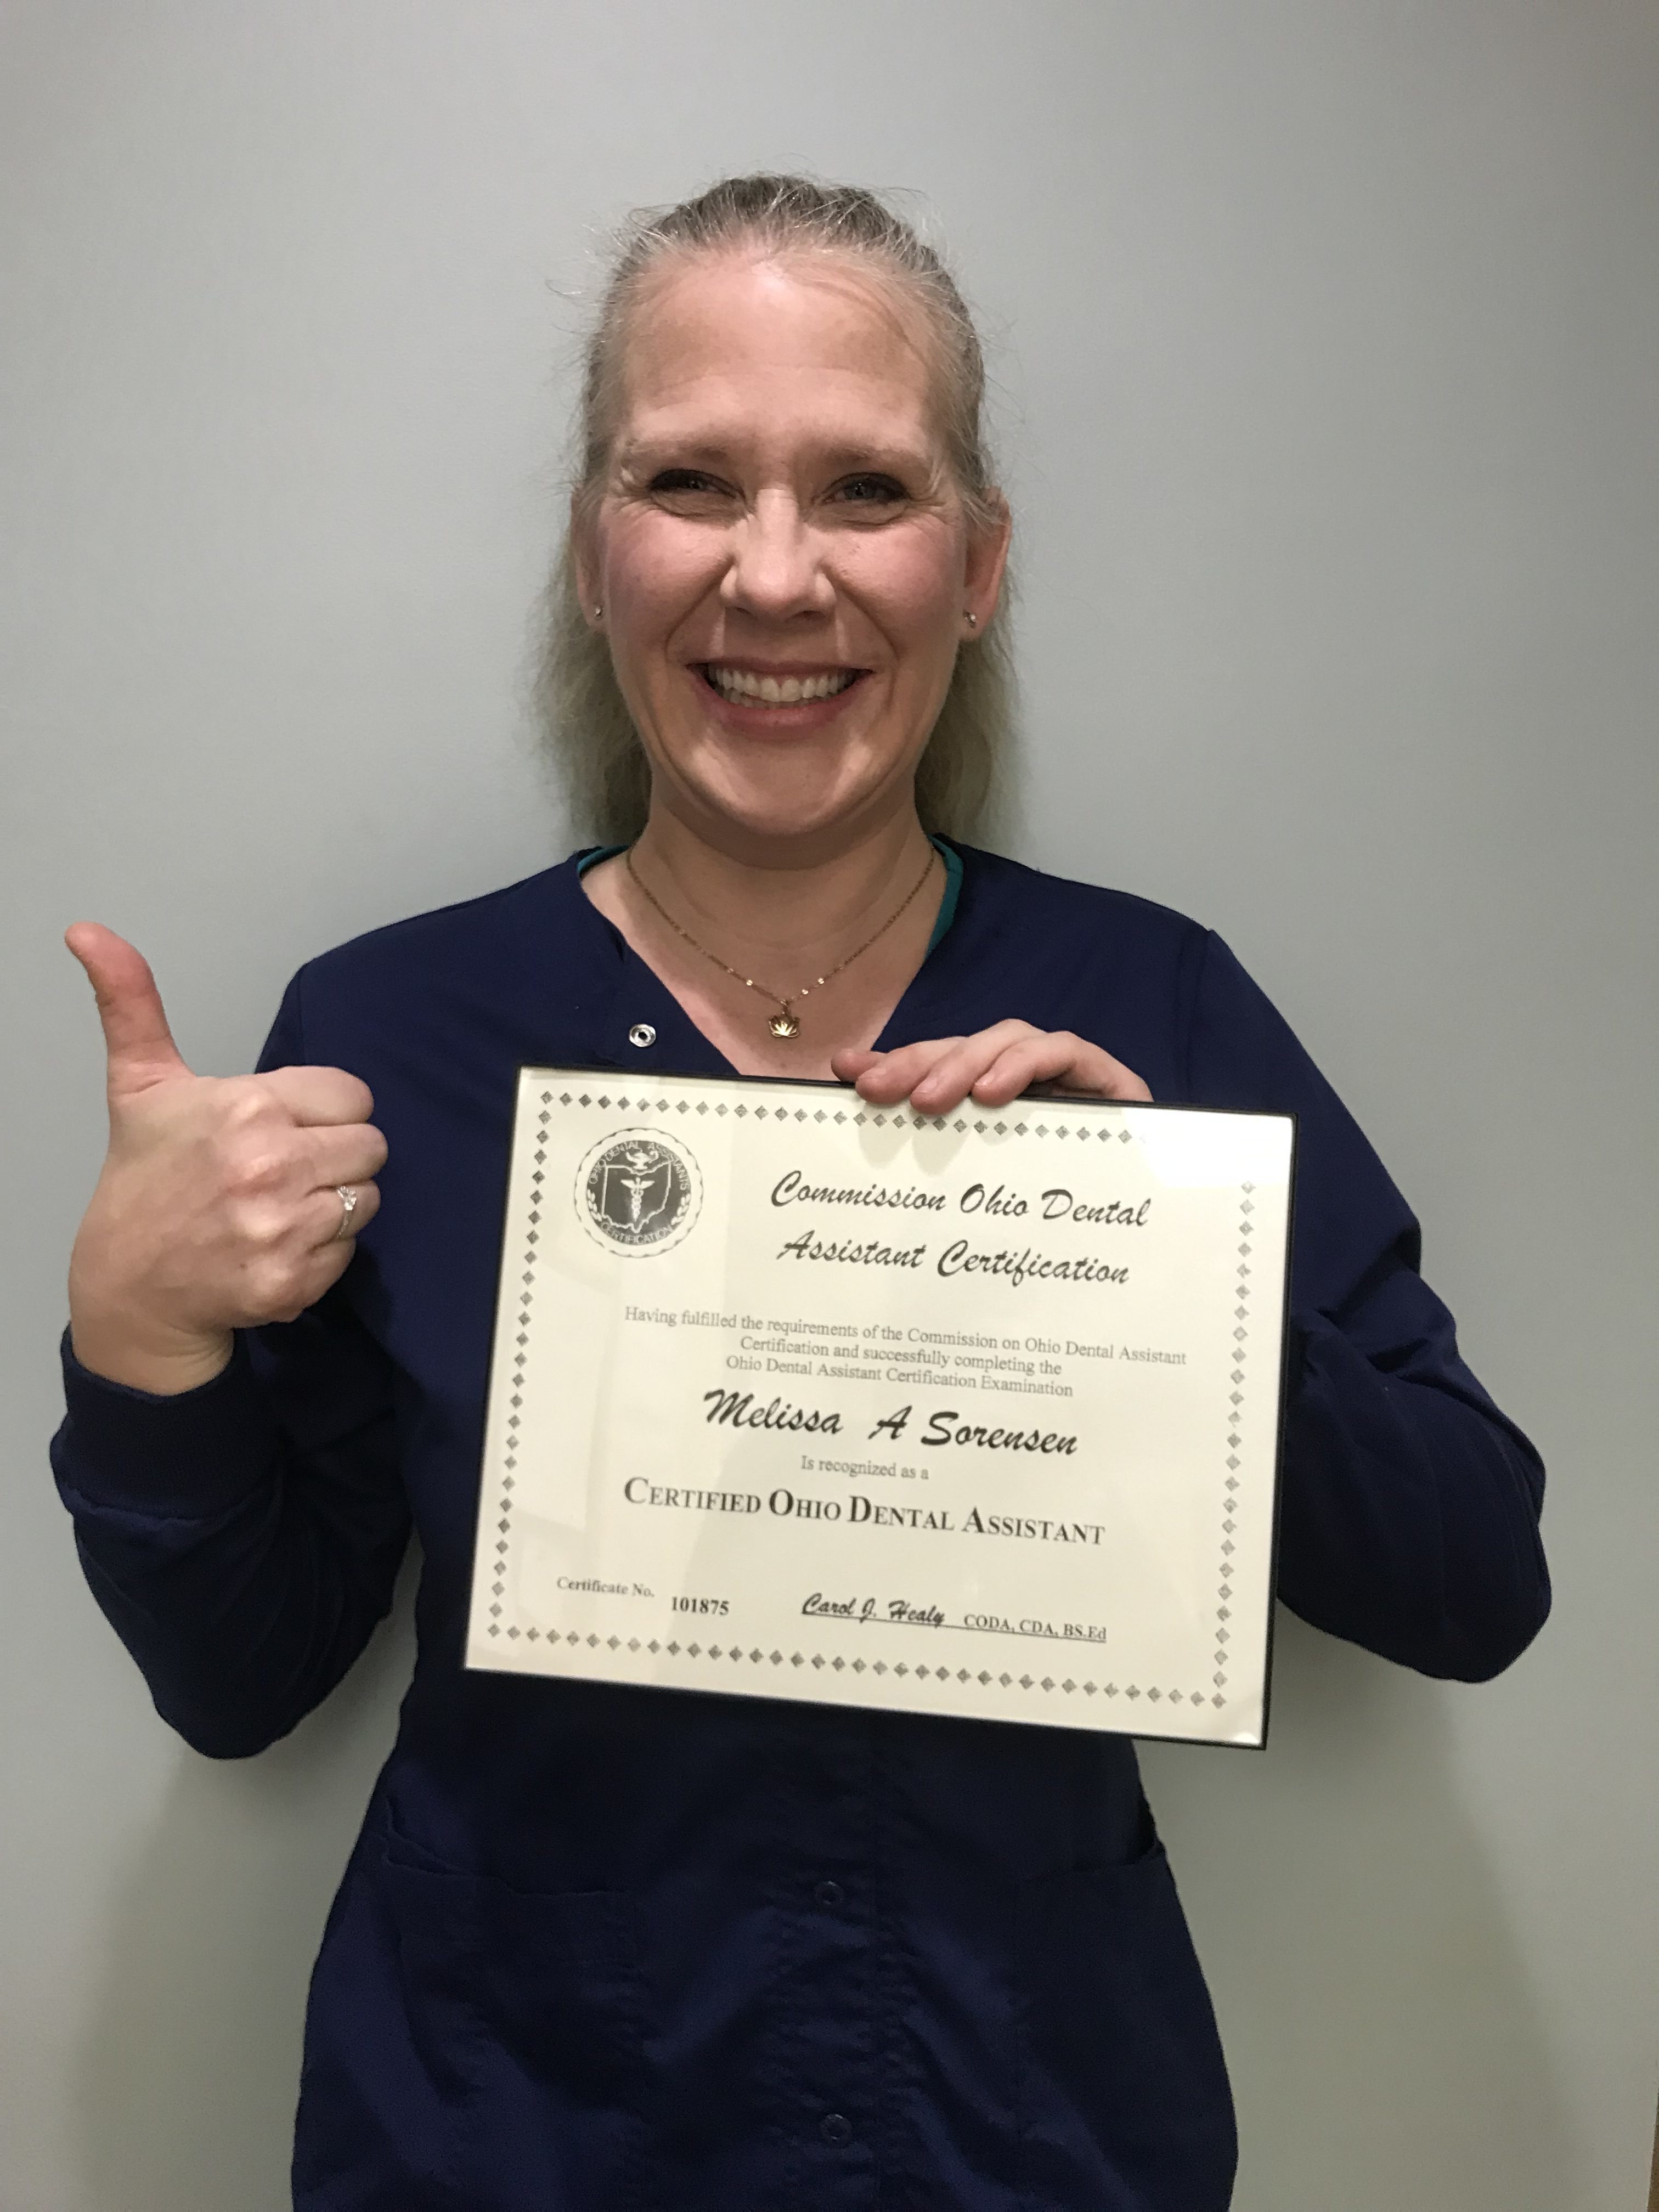 Congrats to Melissa; Dental Assistant Certification